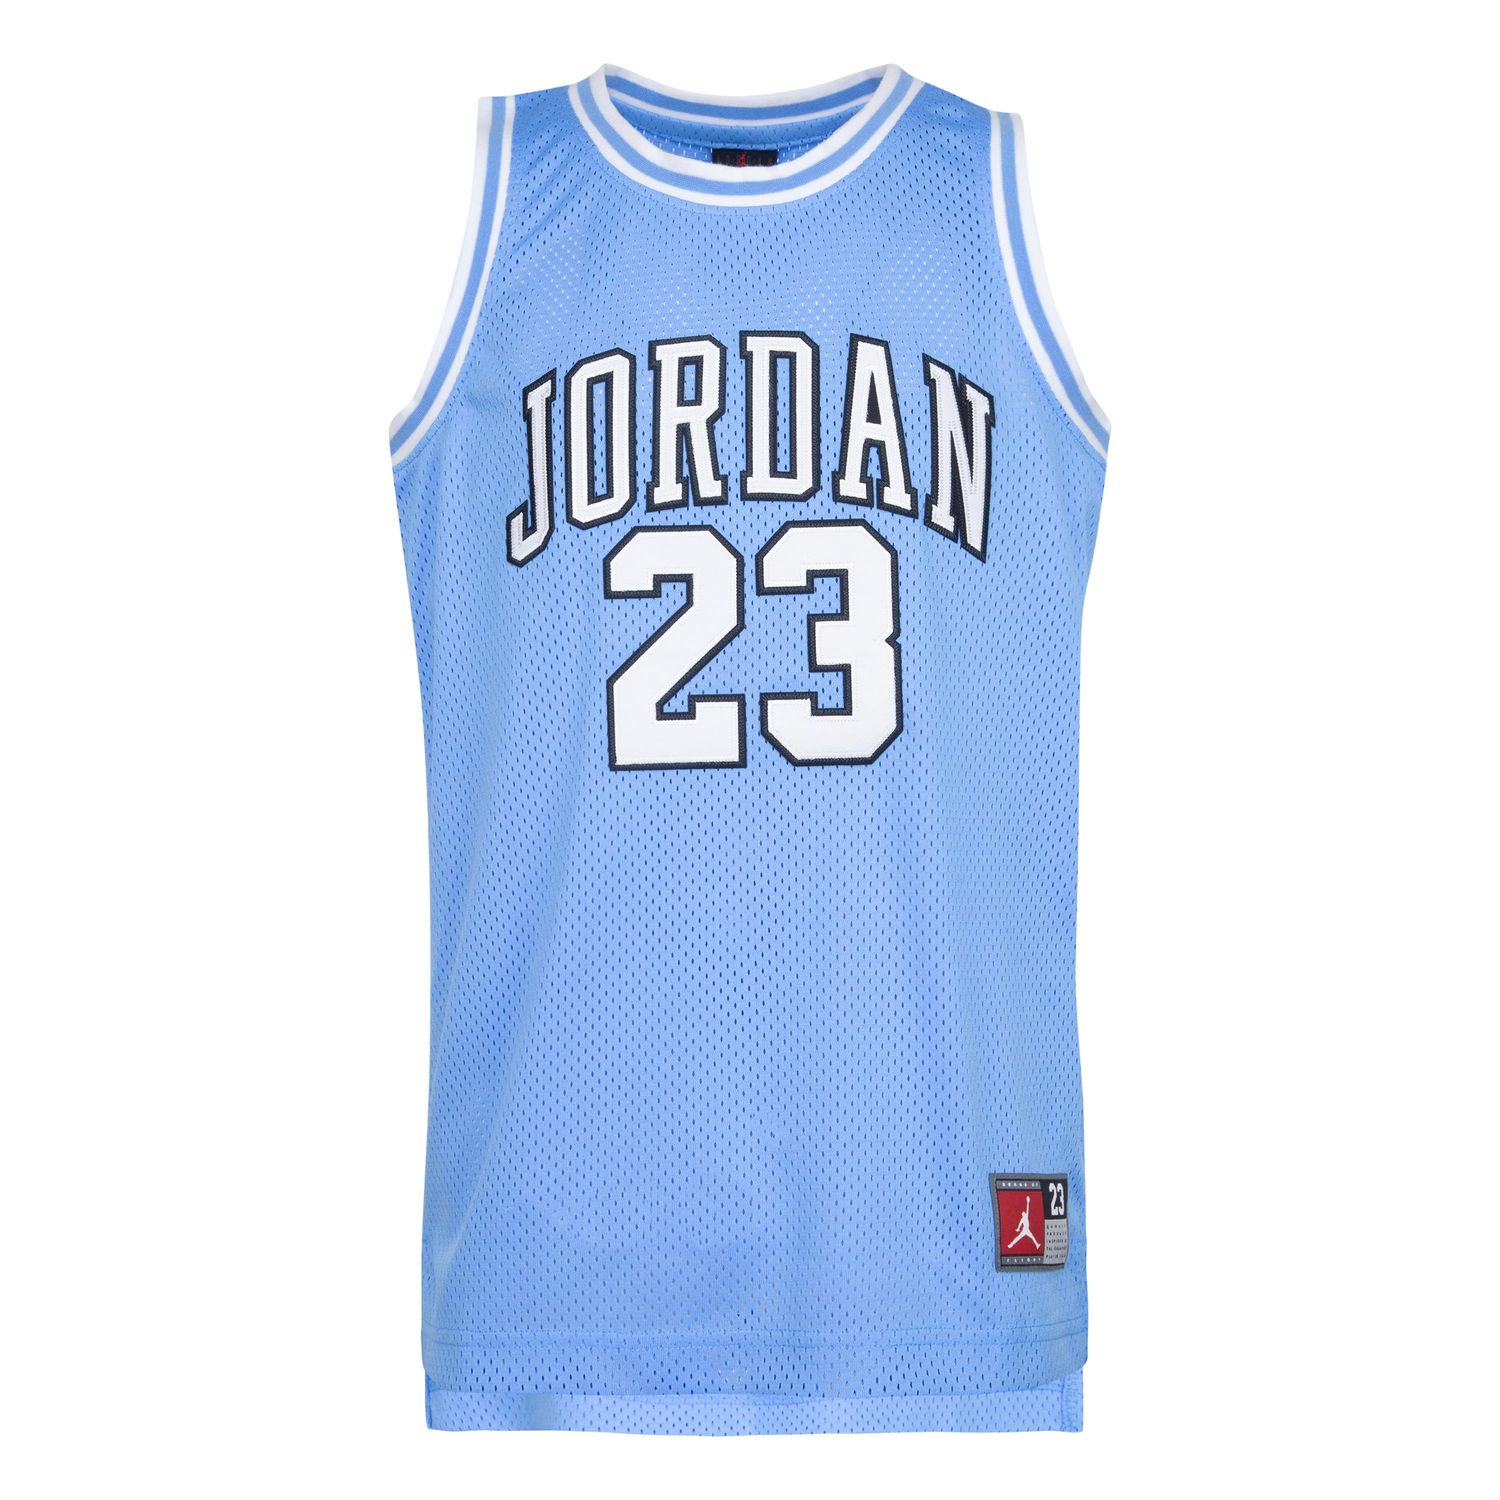 Jordan 23 Kinder Jersey